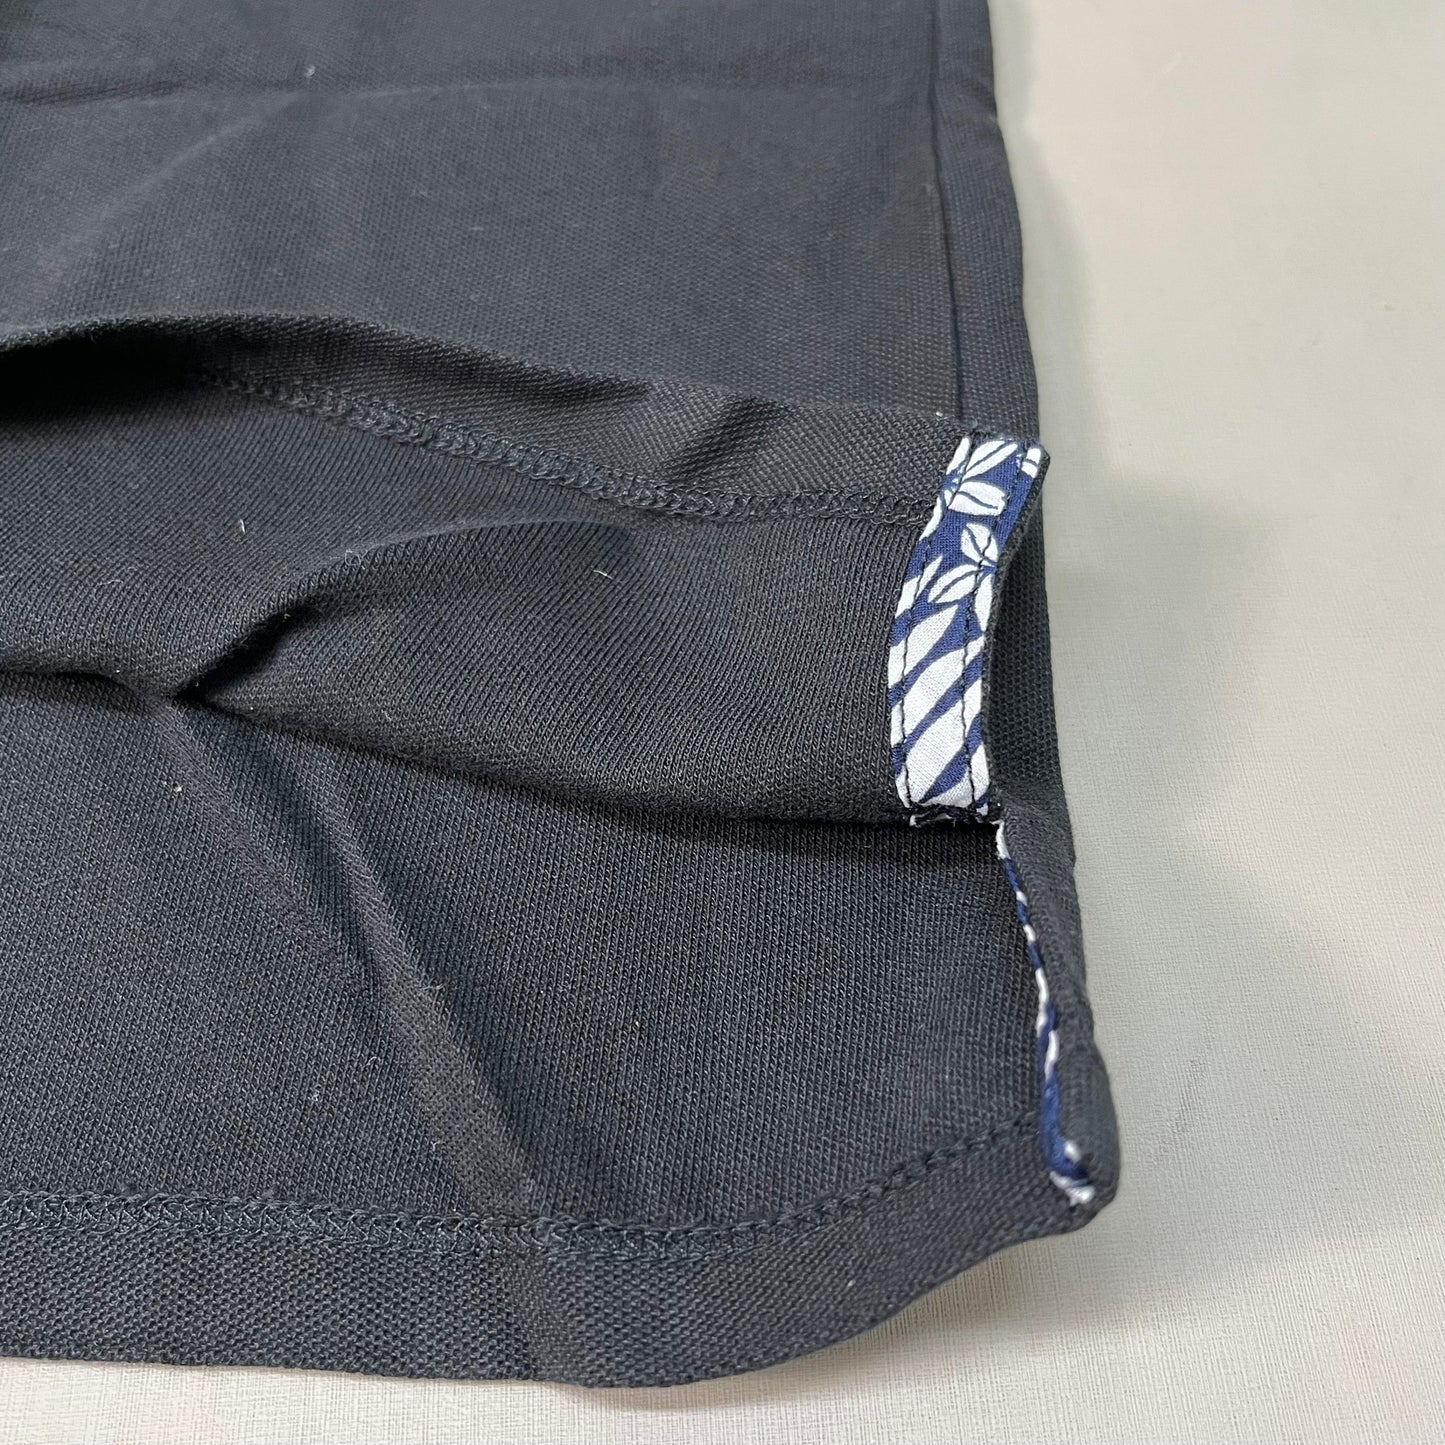 TOMMY BAHAMA Paradise Sleeveless Garment Polo Dress Sz XS Black SW620840 (New)